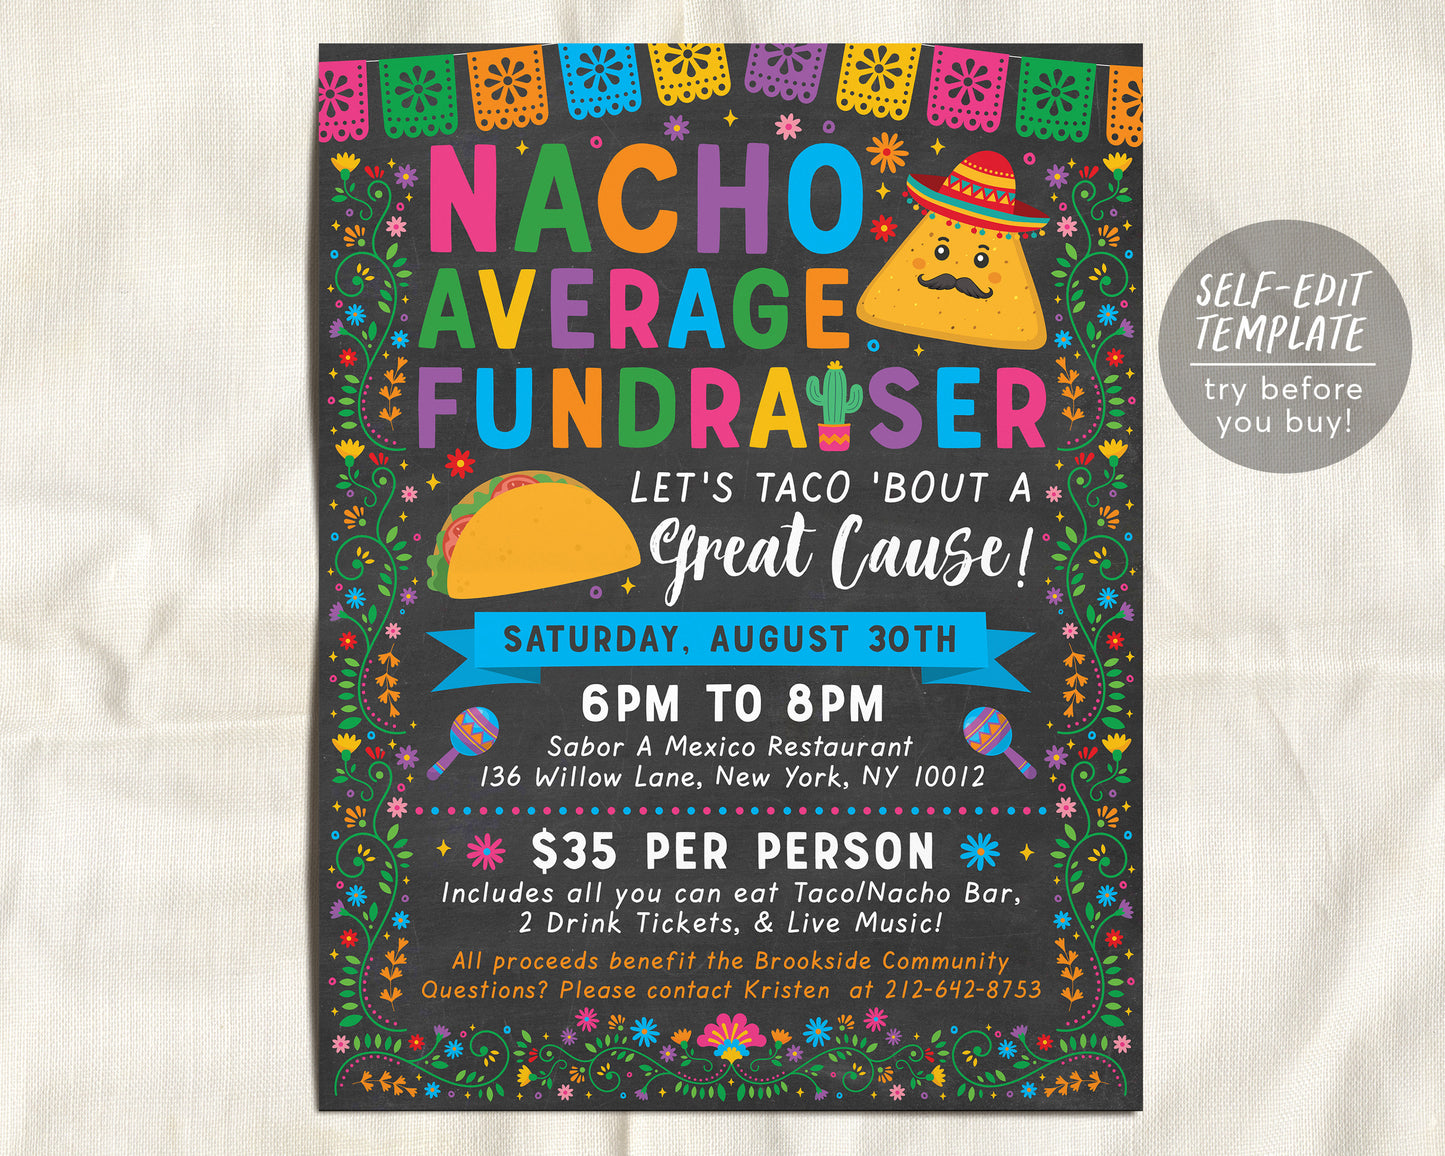 Taco Nacho Bar Fundraiser Flyer Editable Template, Fiesta Charity Nacho Average Mexican Theme, Church Community PTO PTA School Benefit Event